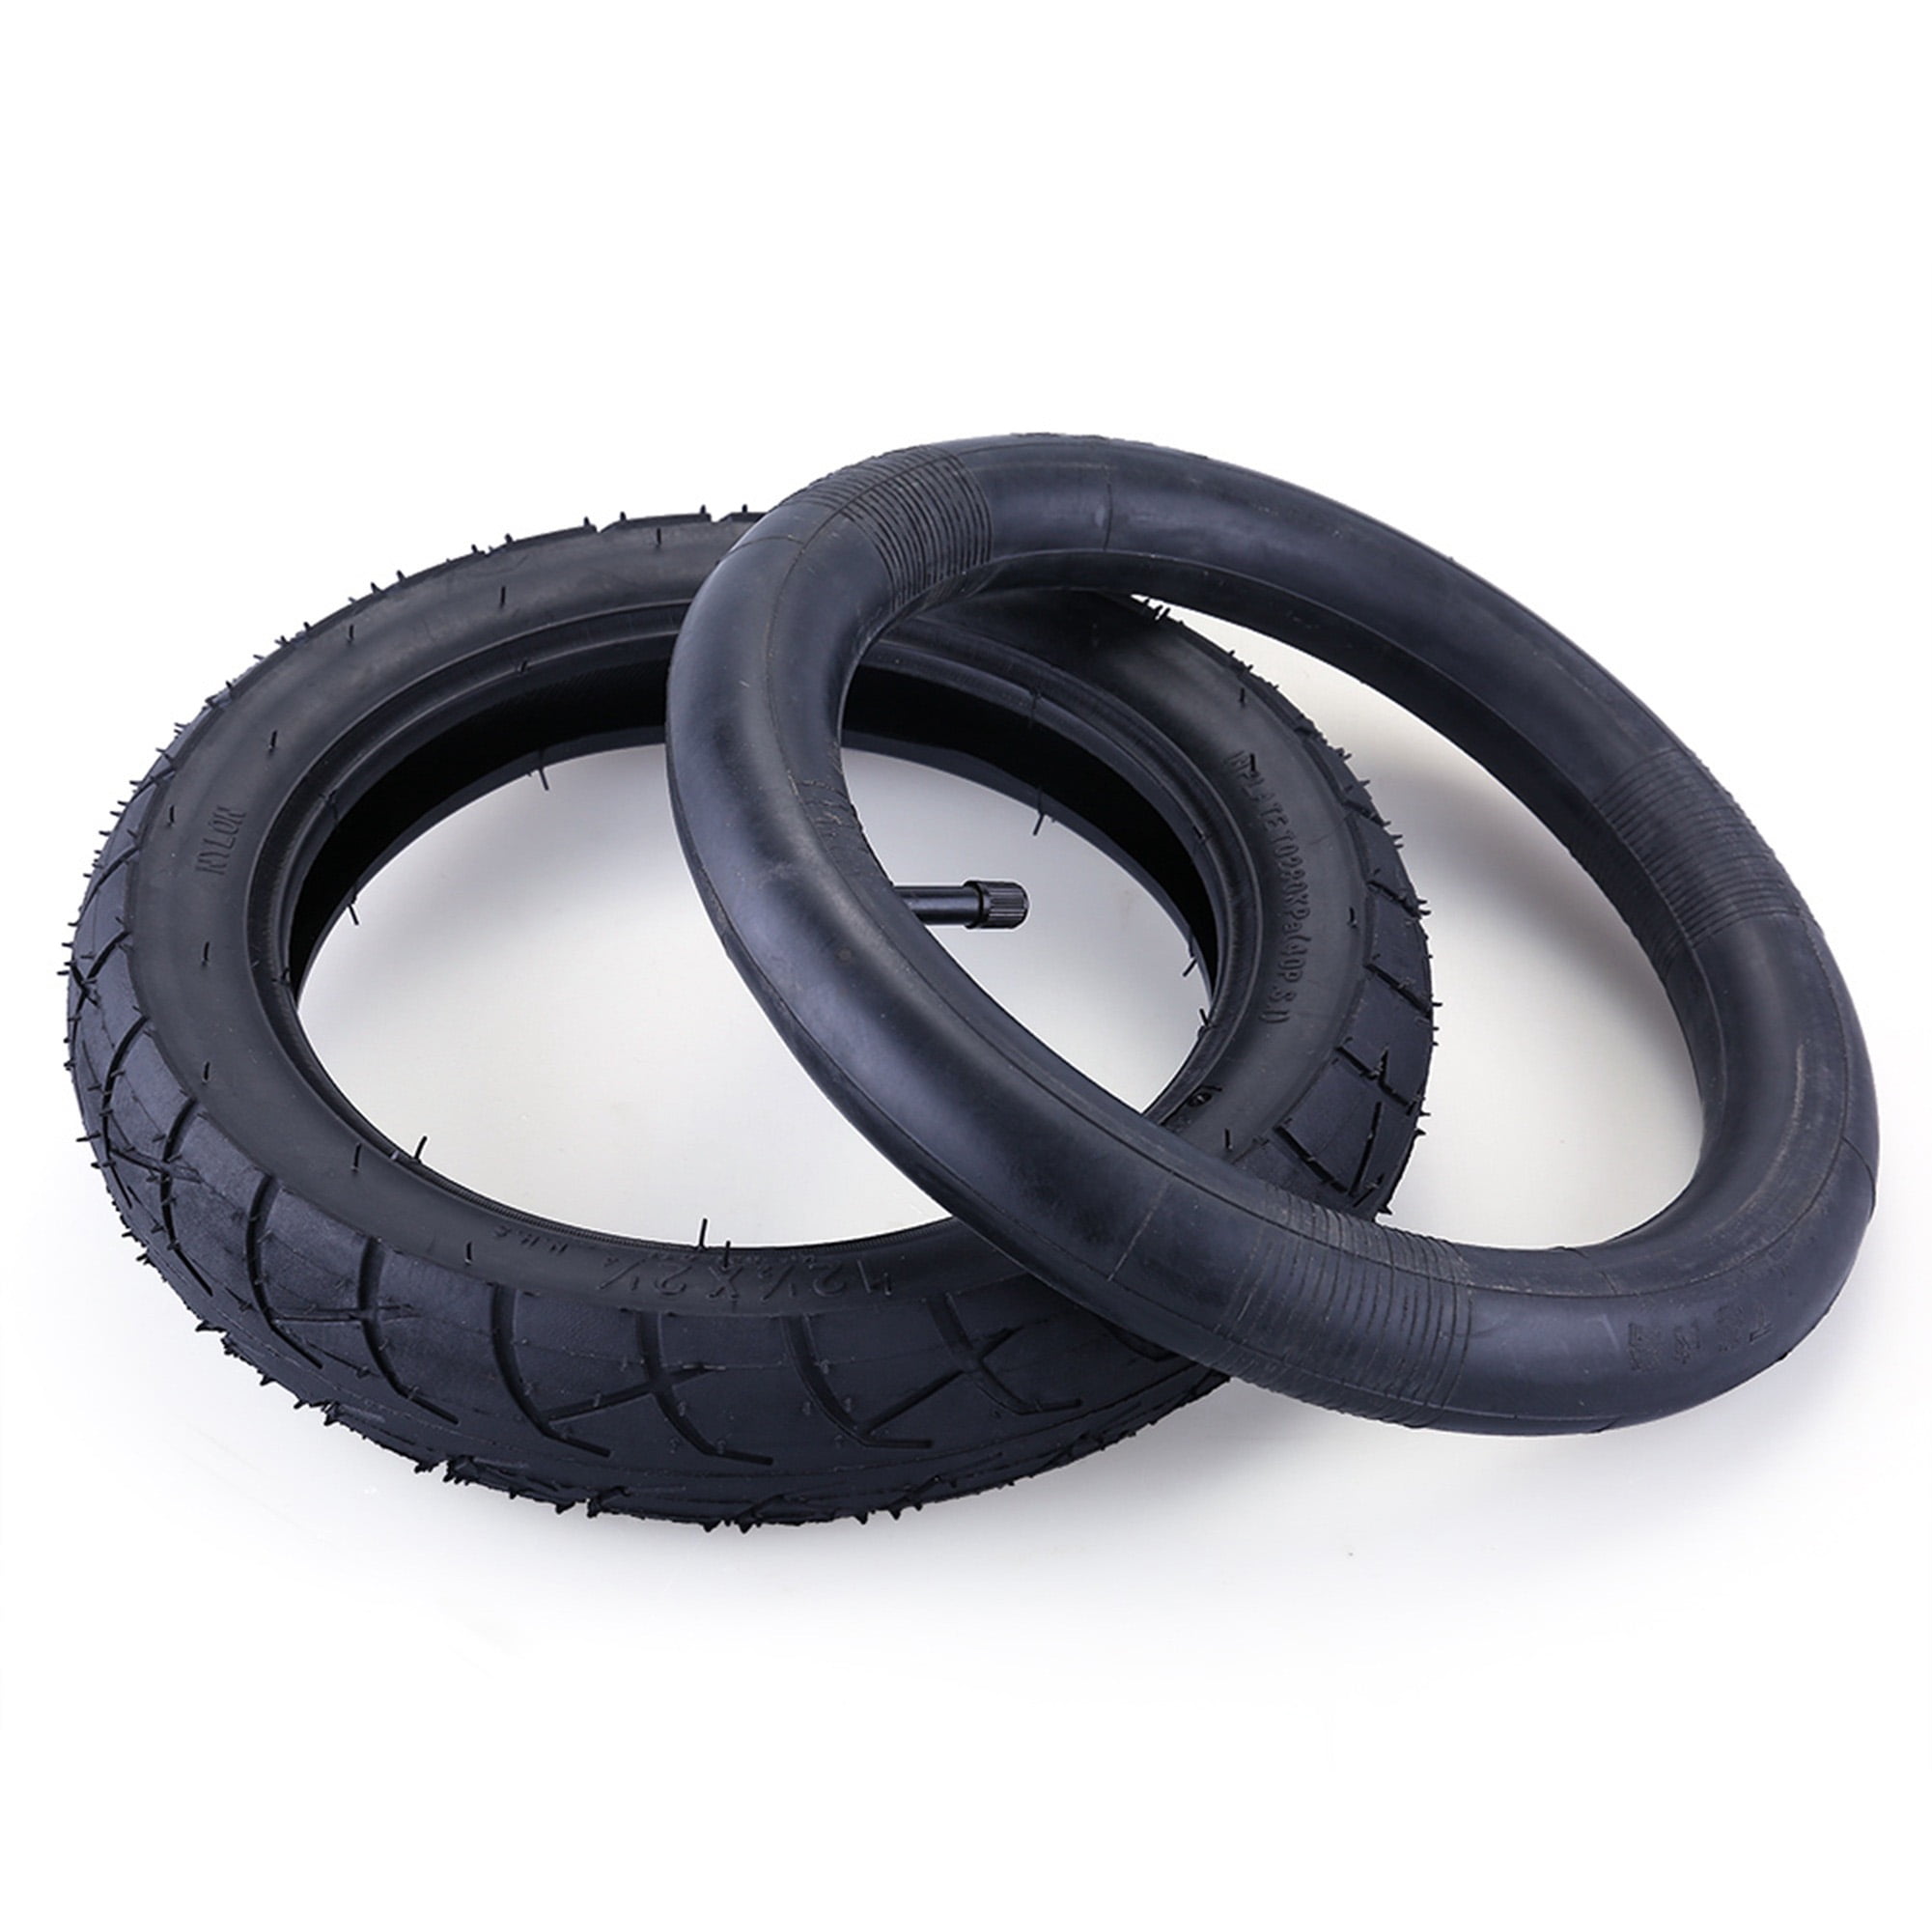 Qind Razor Pocket Mod Tire & Inner Tube Set 